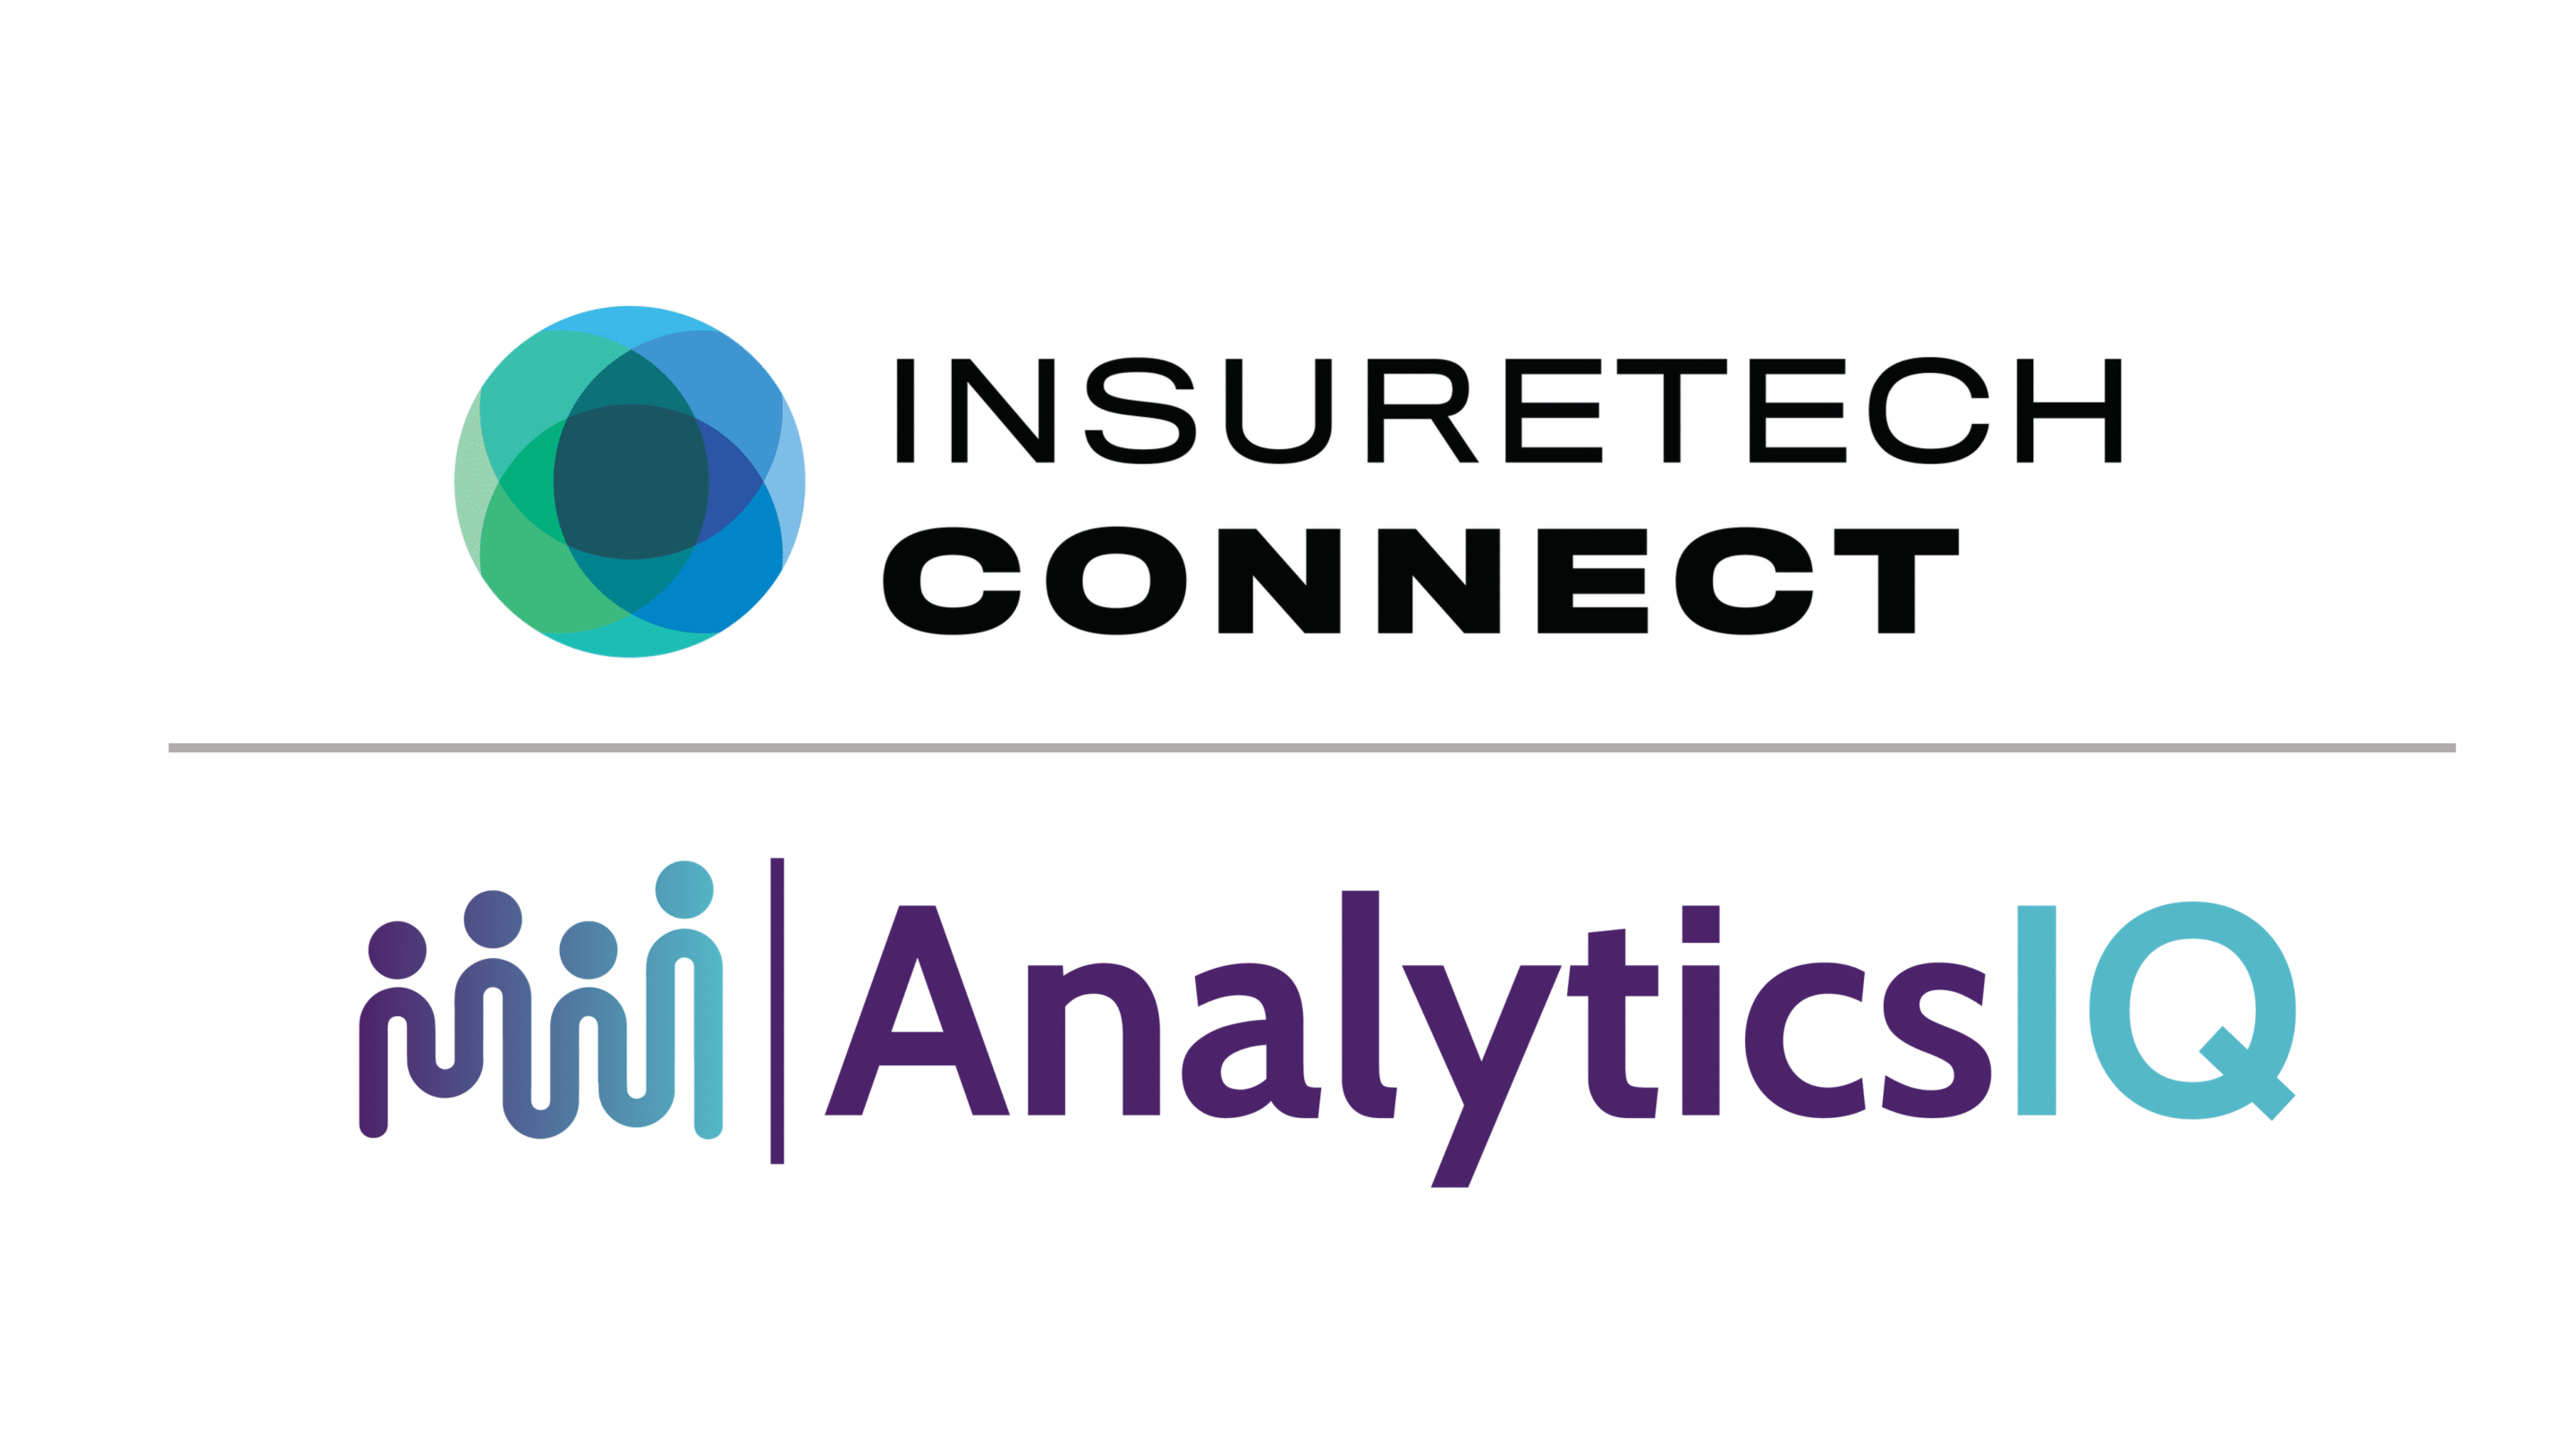 insuretech connect and analyticsiq